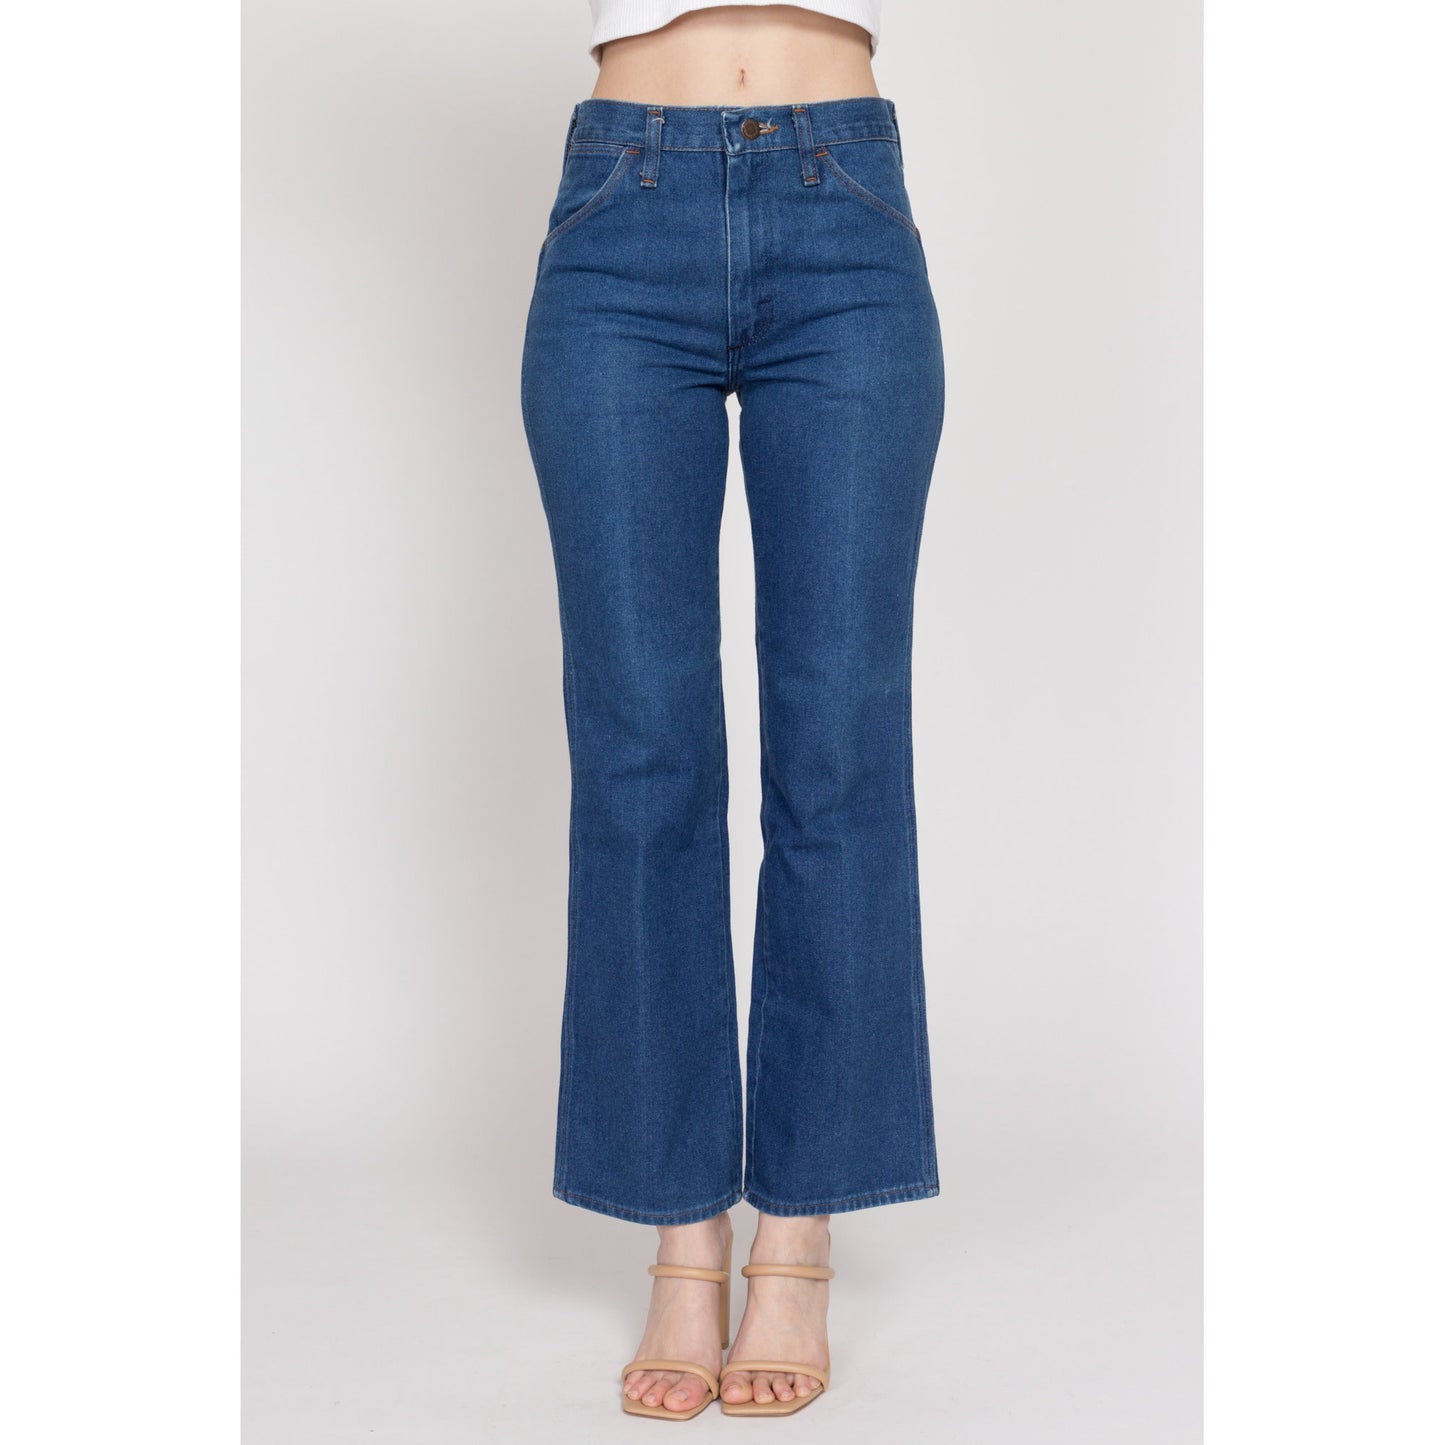 28" Waist 70s Wrangler Mid Rise Jeans Unisex | Vintage Medium Wash Denim Flared Jeans